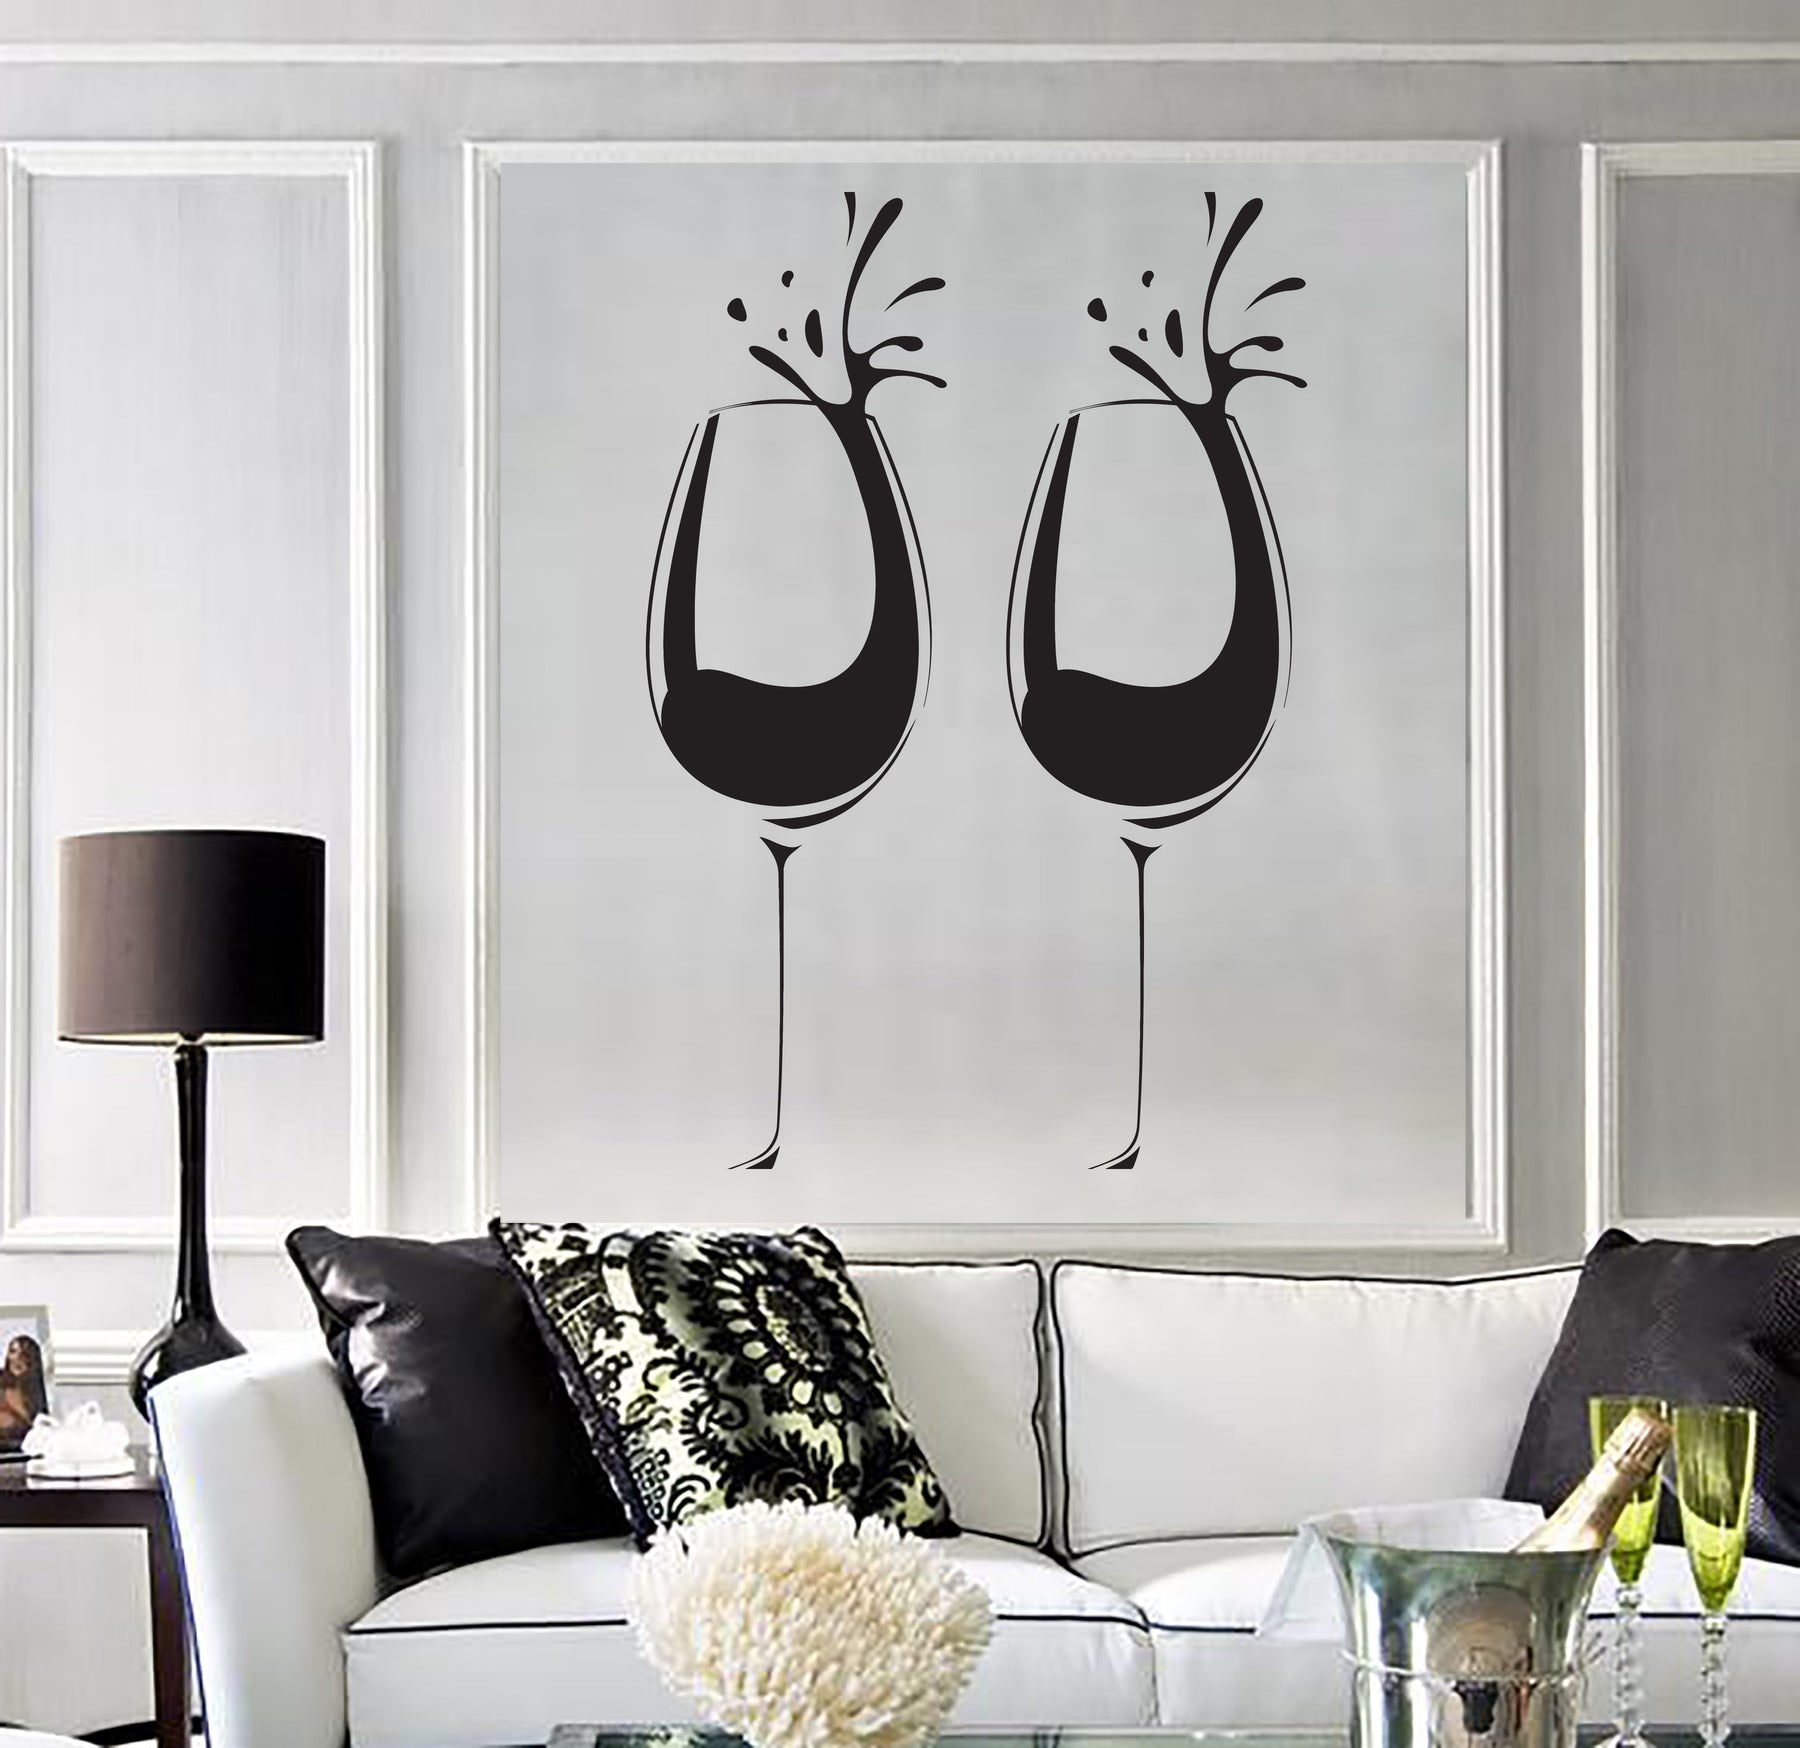 Decal Wall Sticker Wine Glass Alcohol Drink Restauran — Wallstickers4you